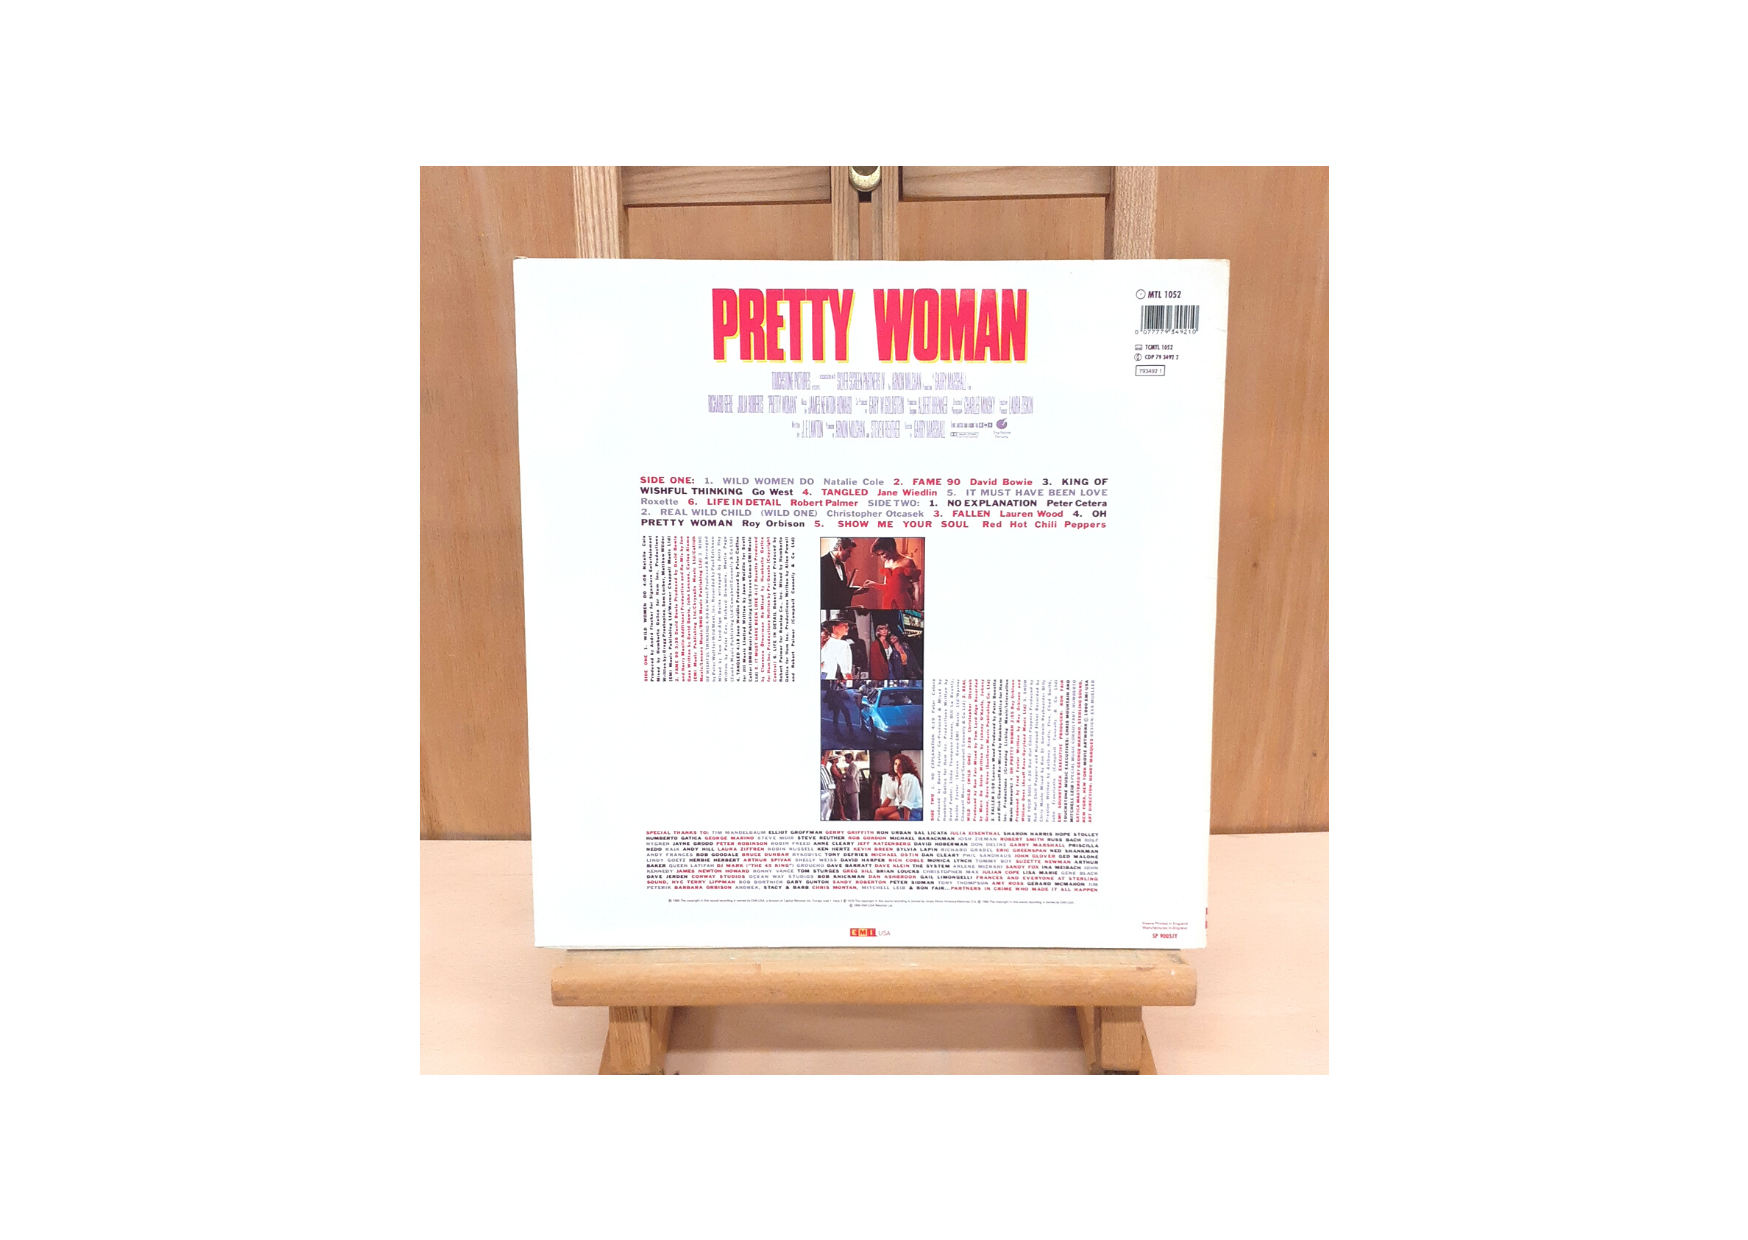 Pretty Woman - Original Soundtrack Vinyl Album Rear View